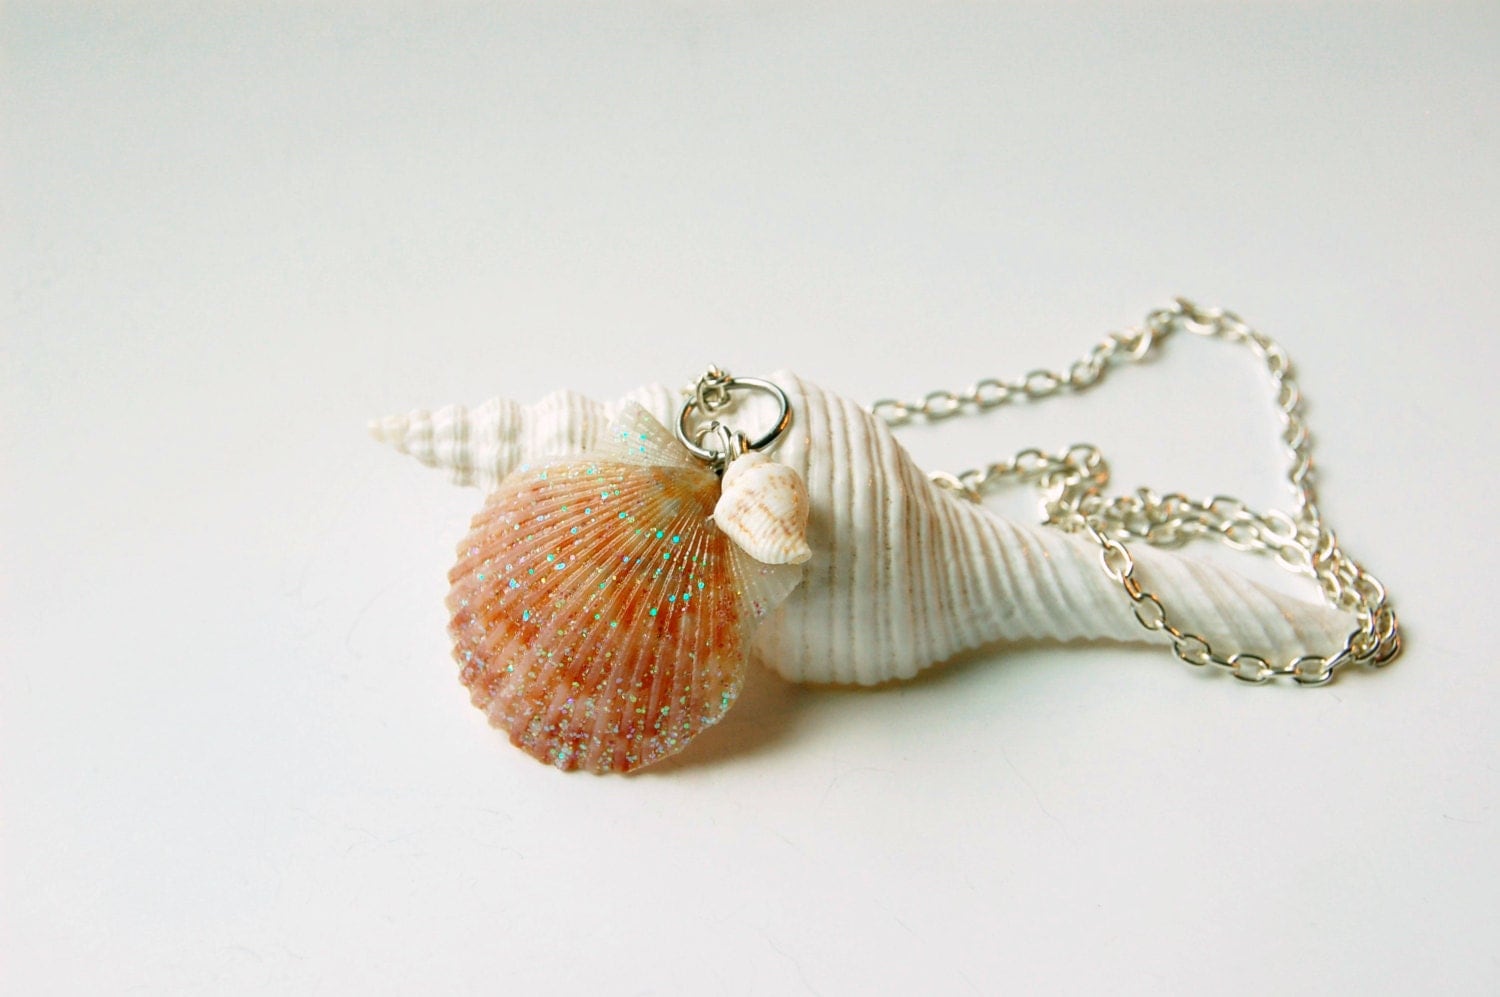 Little Mermaid Shell Necklace Seashell by LovesShellsBeads on Etsy